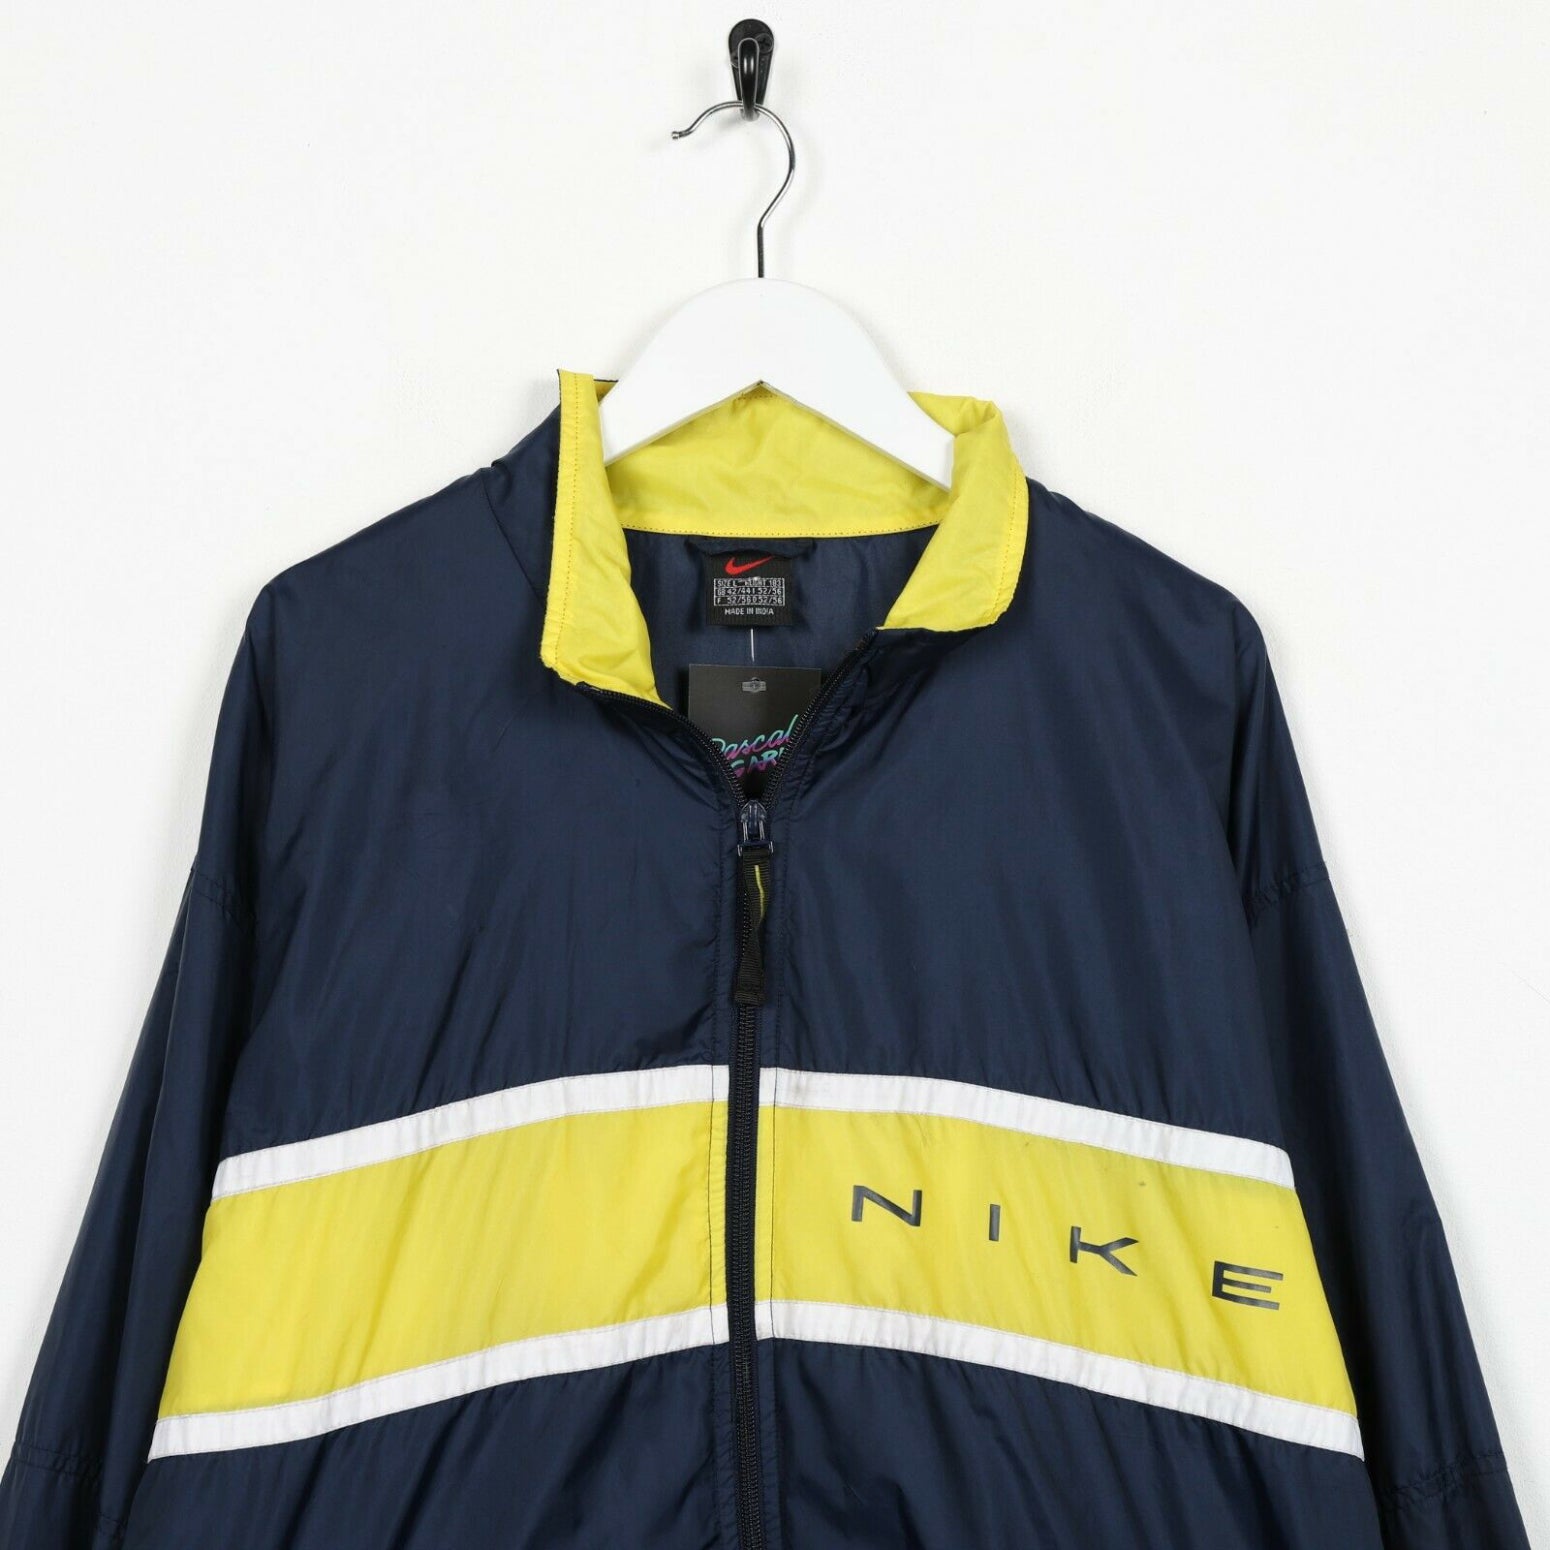 nike blue and yellow jacket